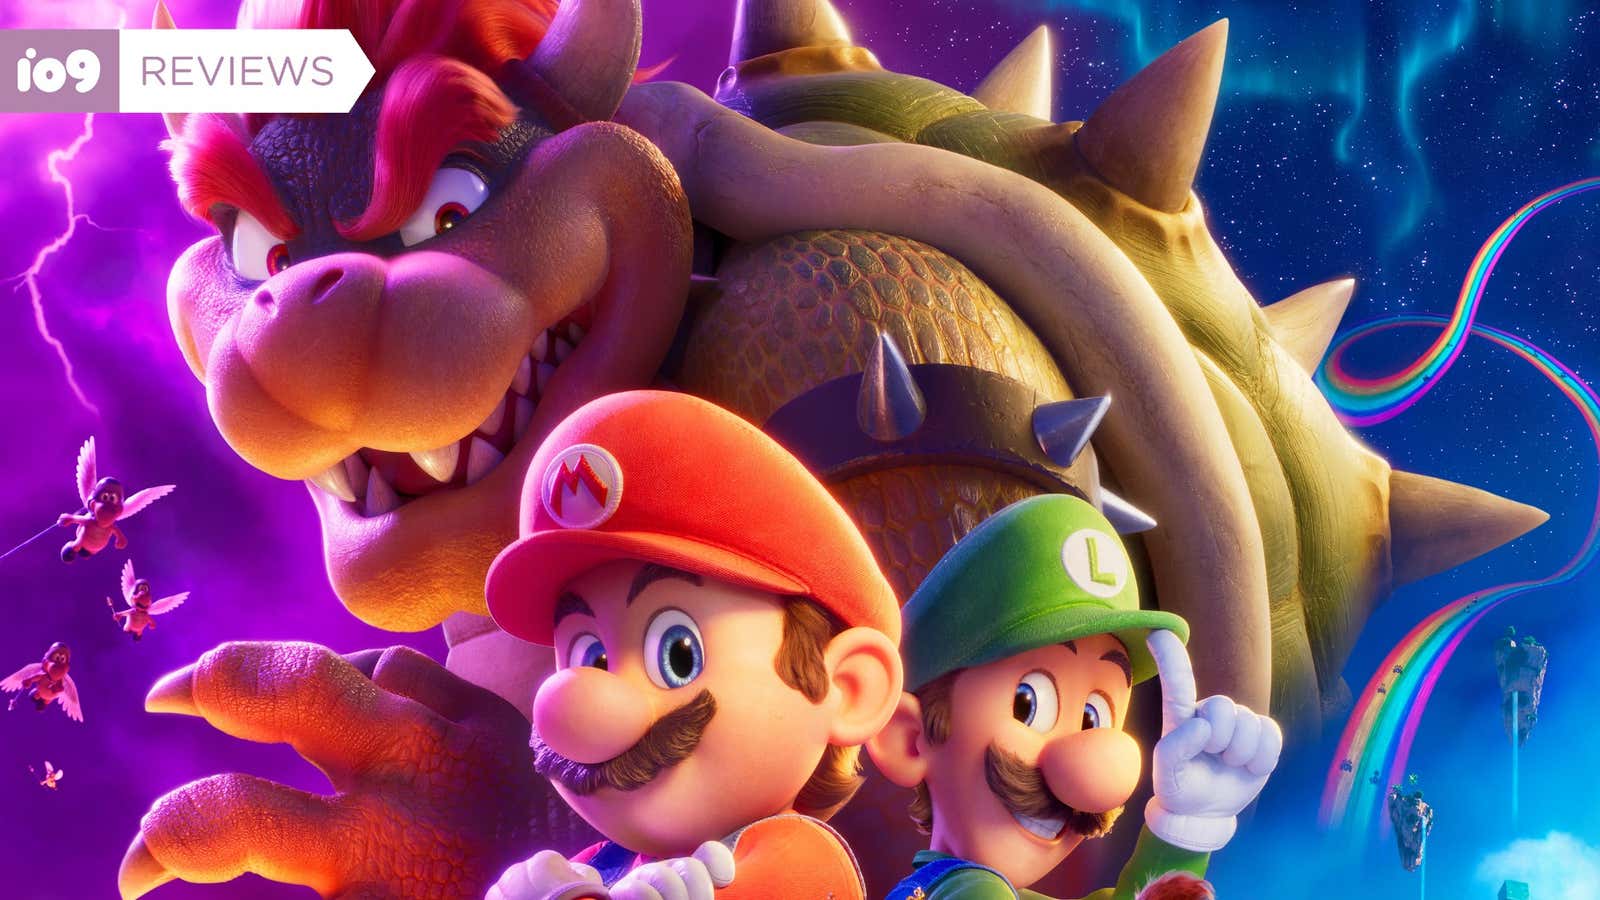 The Super Mario Bros. Movie Movie Review